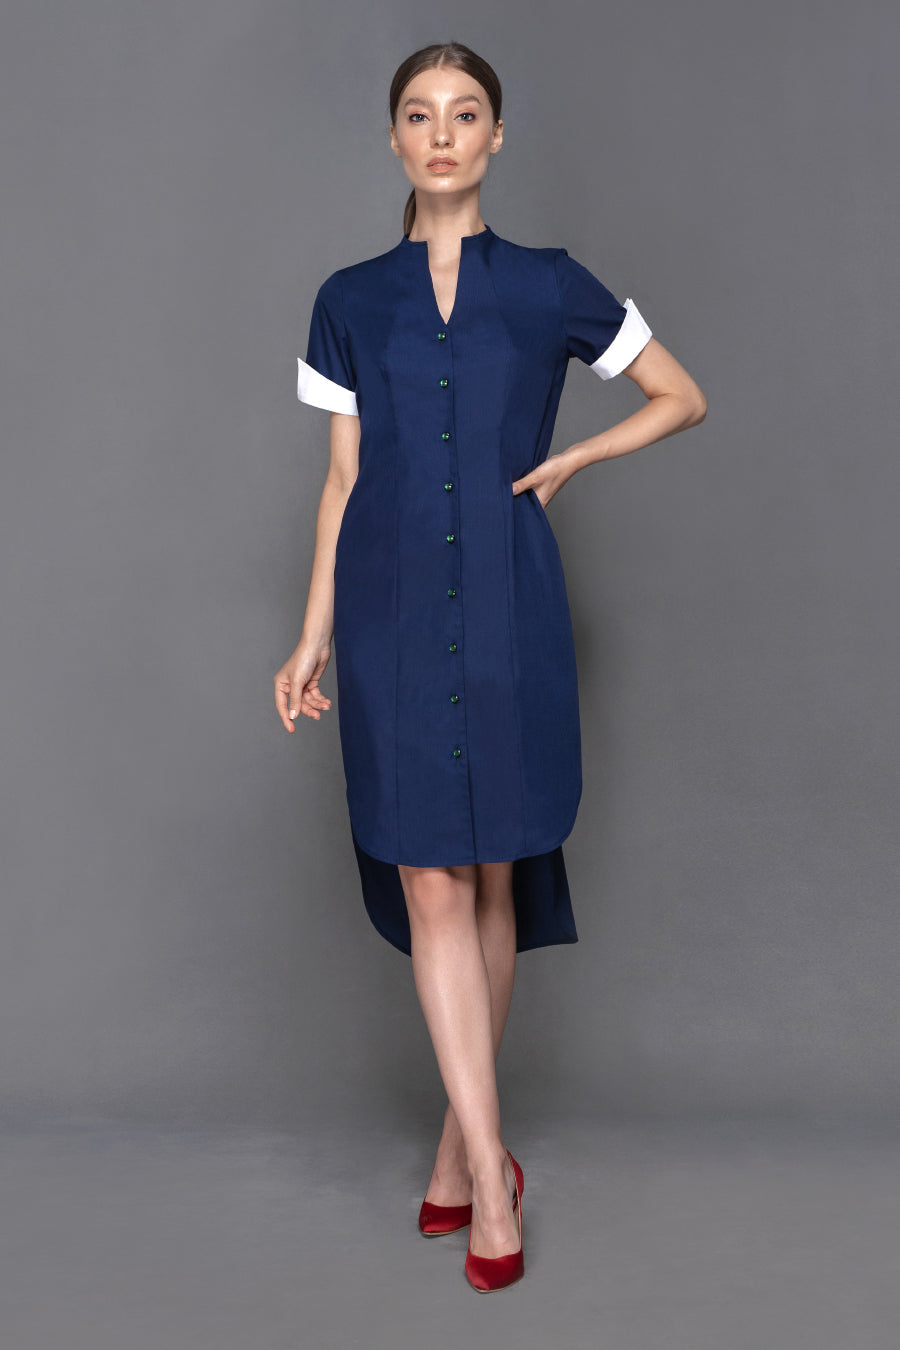 Jessie - Non Iron - Navy Blue button down short sleeve shirt dress